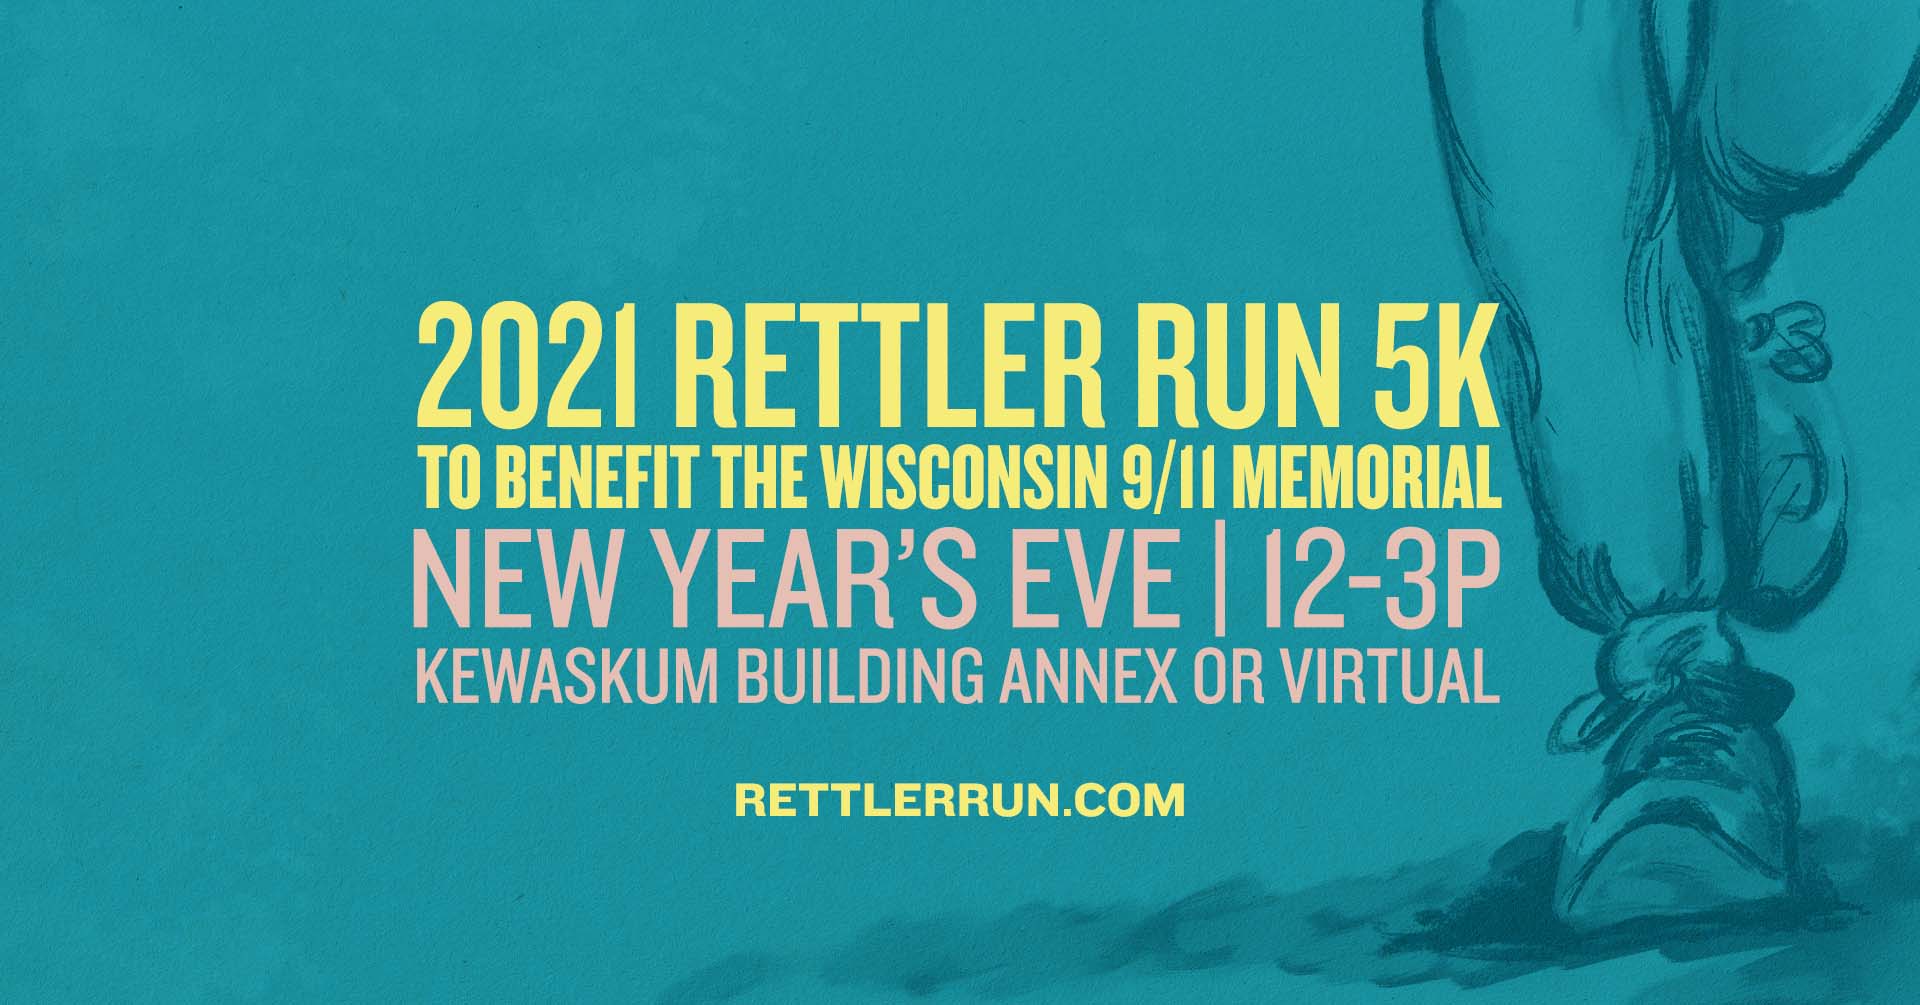 Rettler Run 5k banner showing details of the run and illustrated feet running